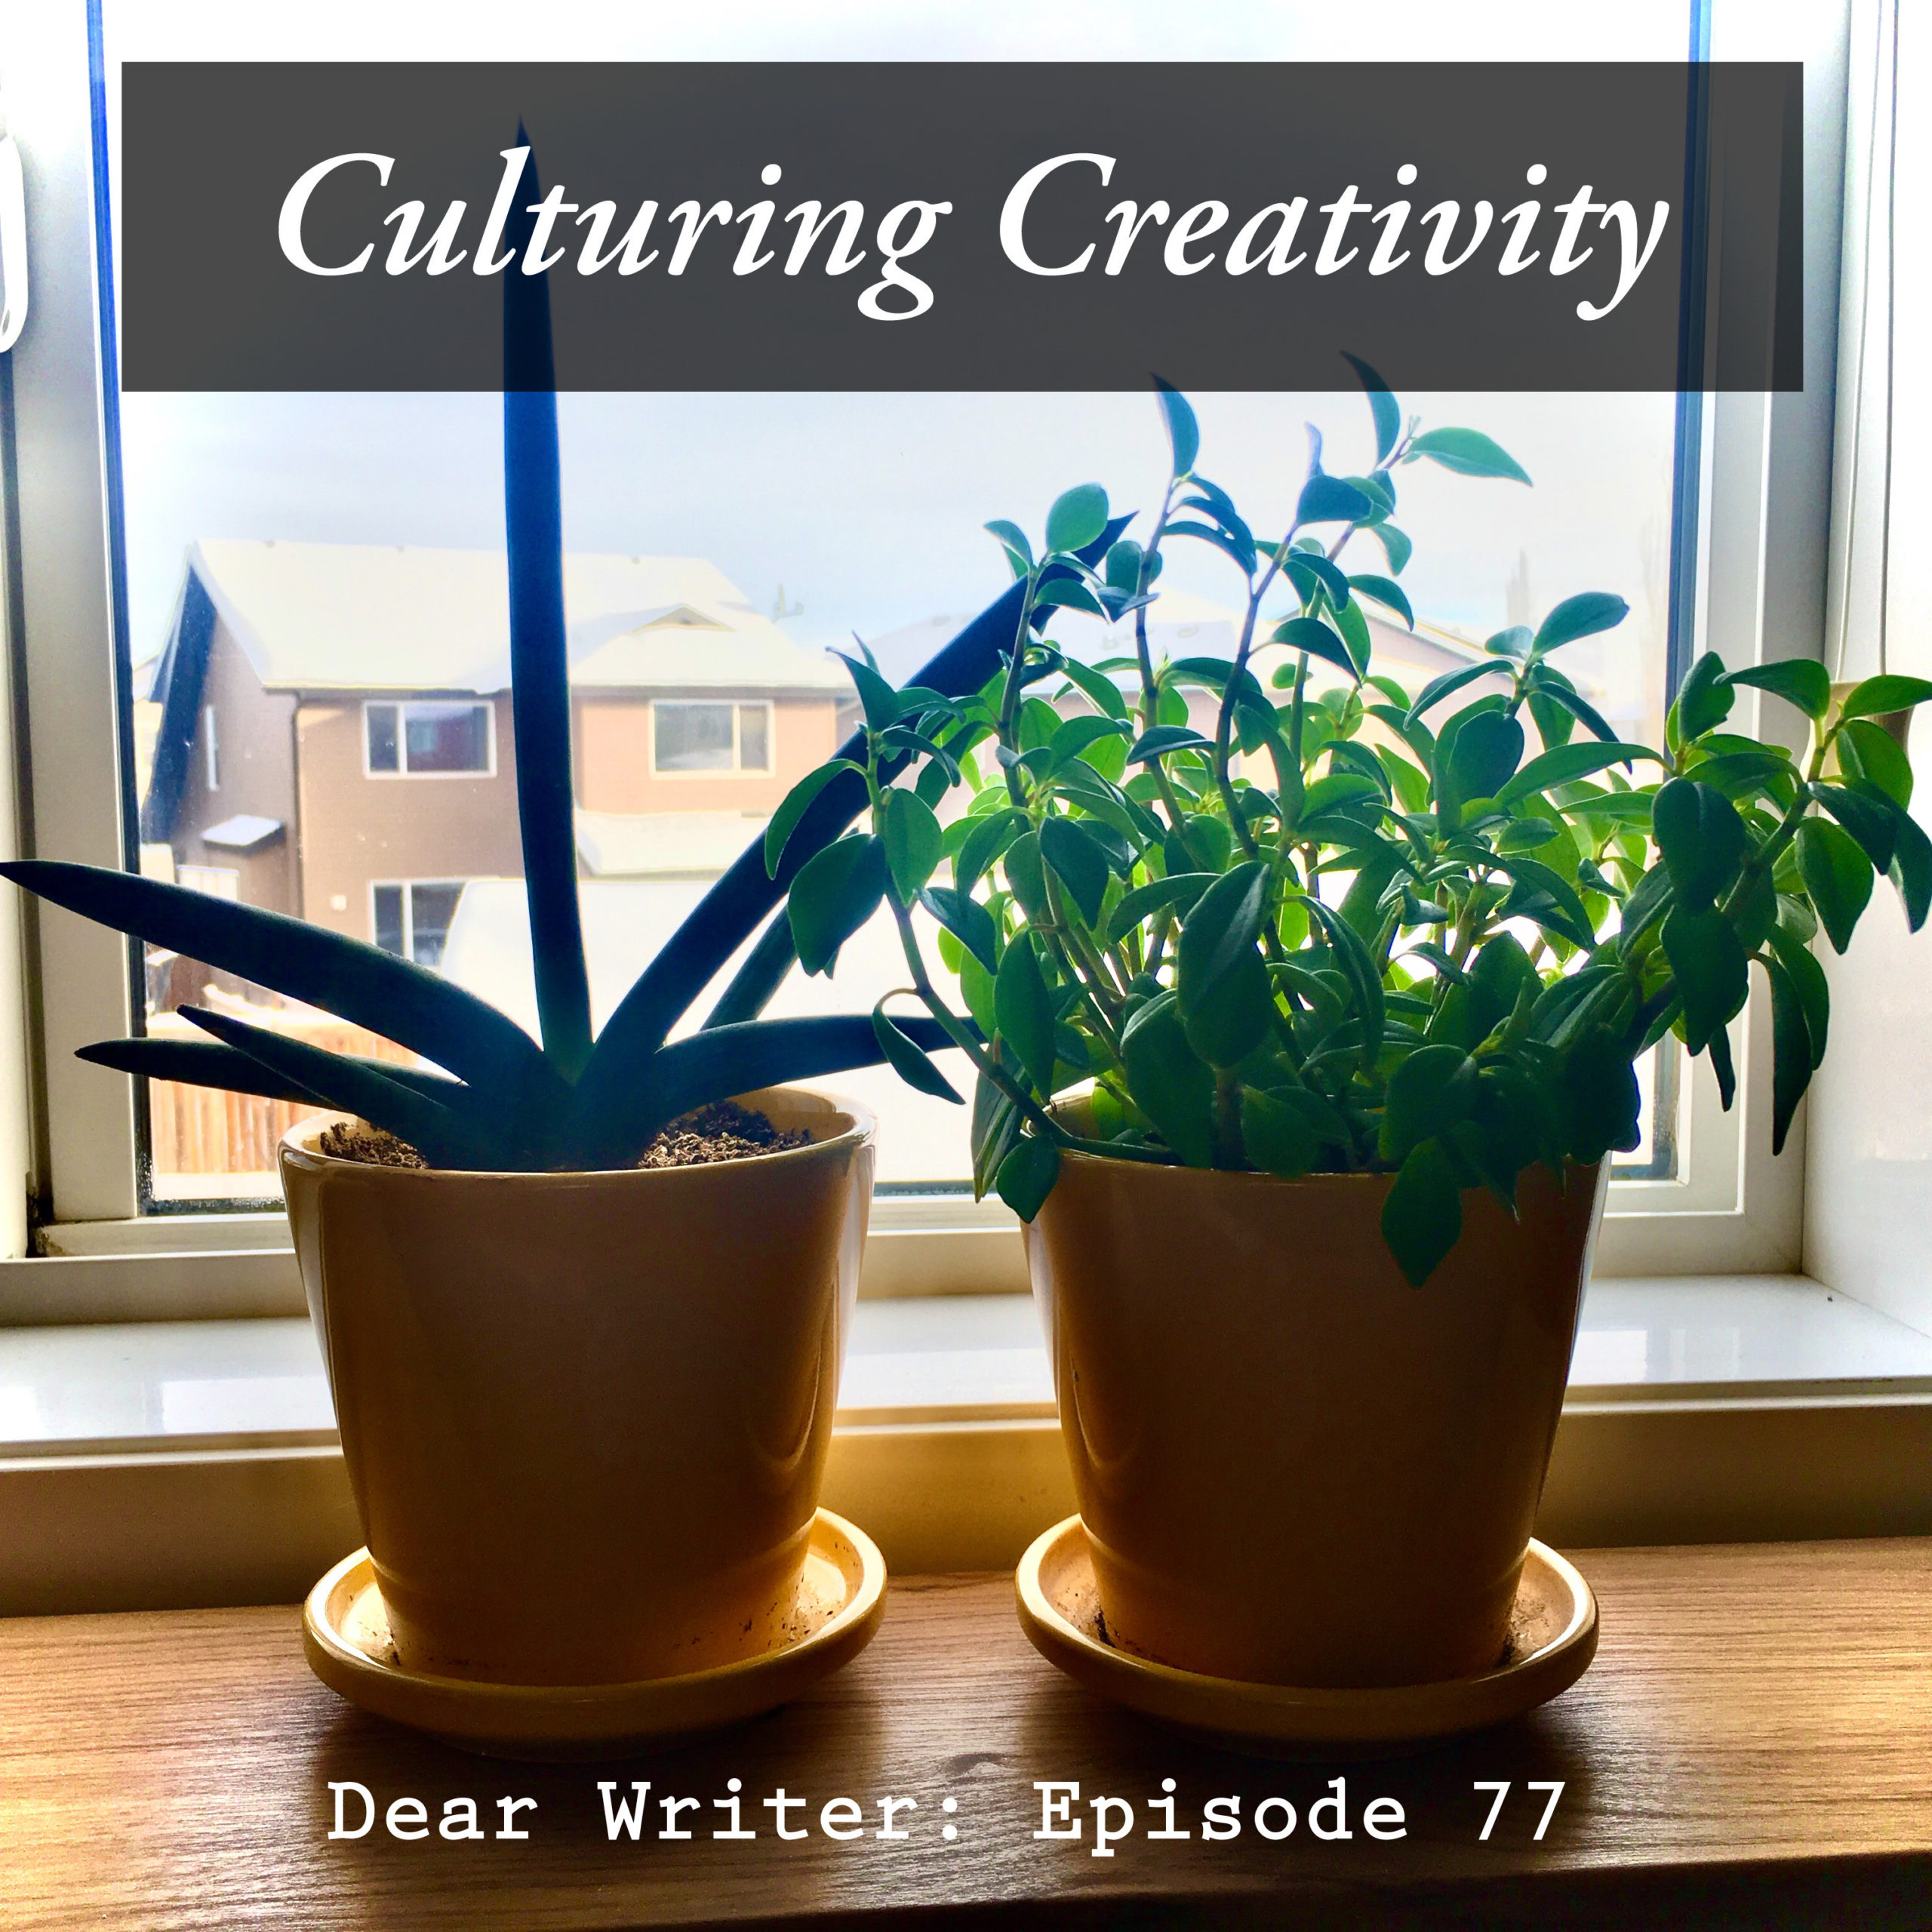 Dear Writer: Episode 77 - Culturing Creativity - Exploding a Moment